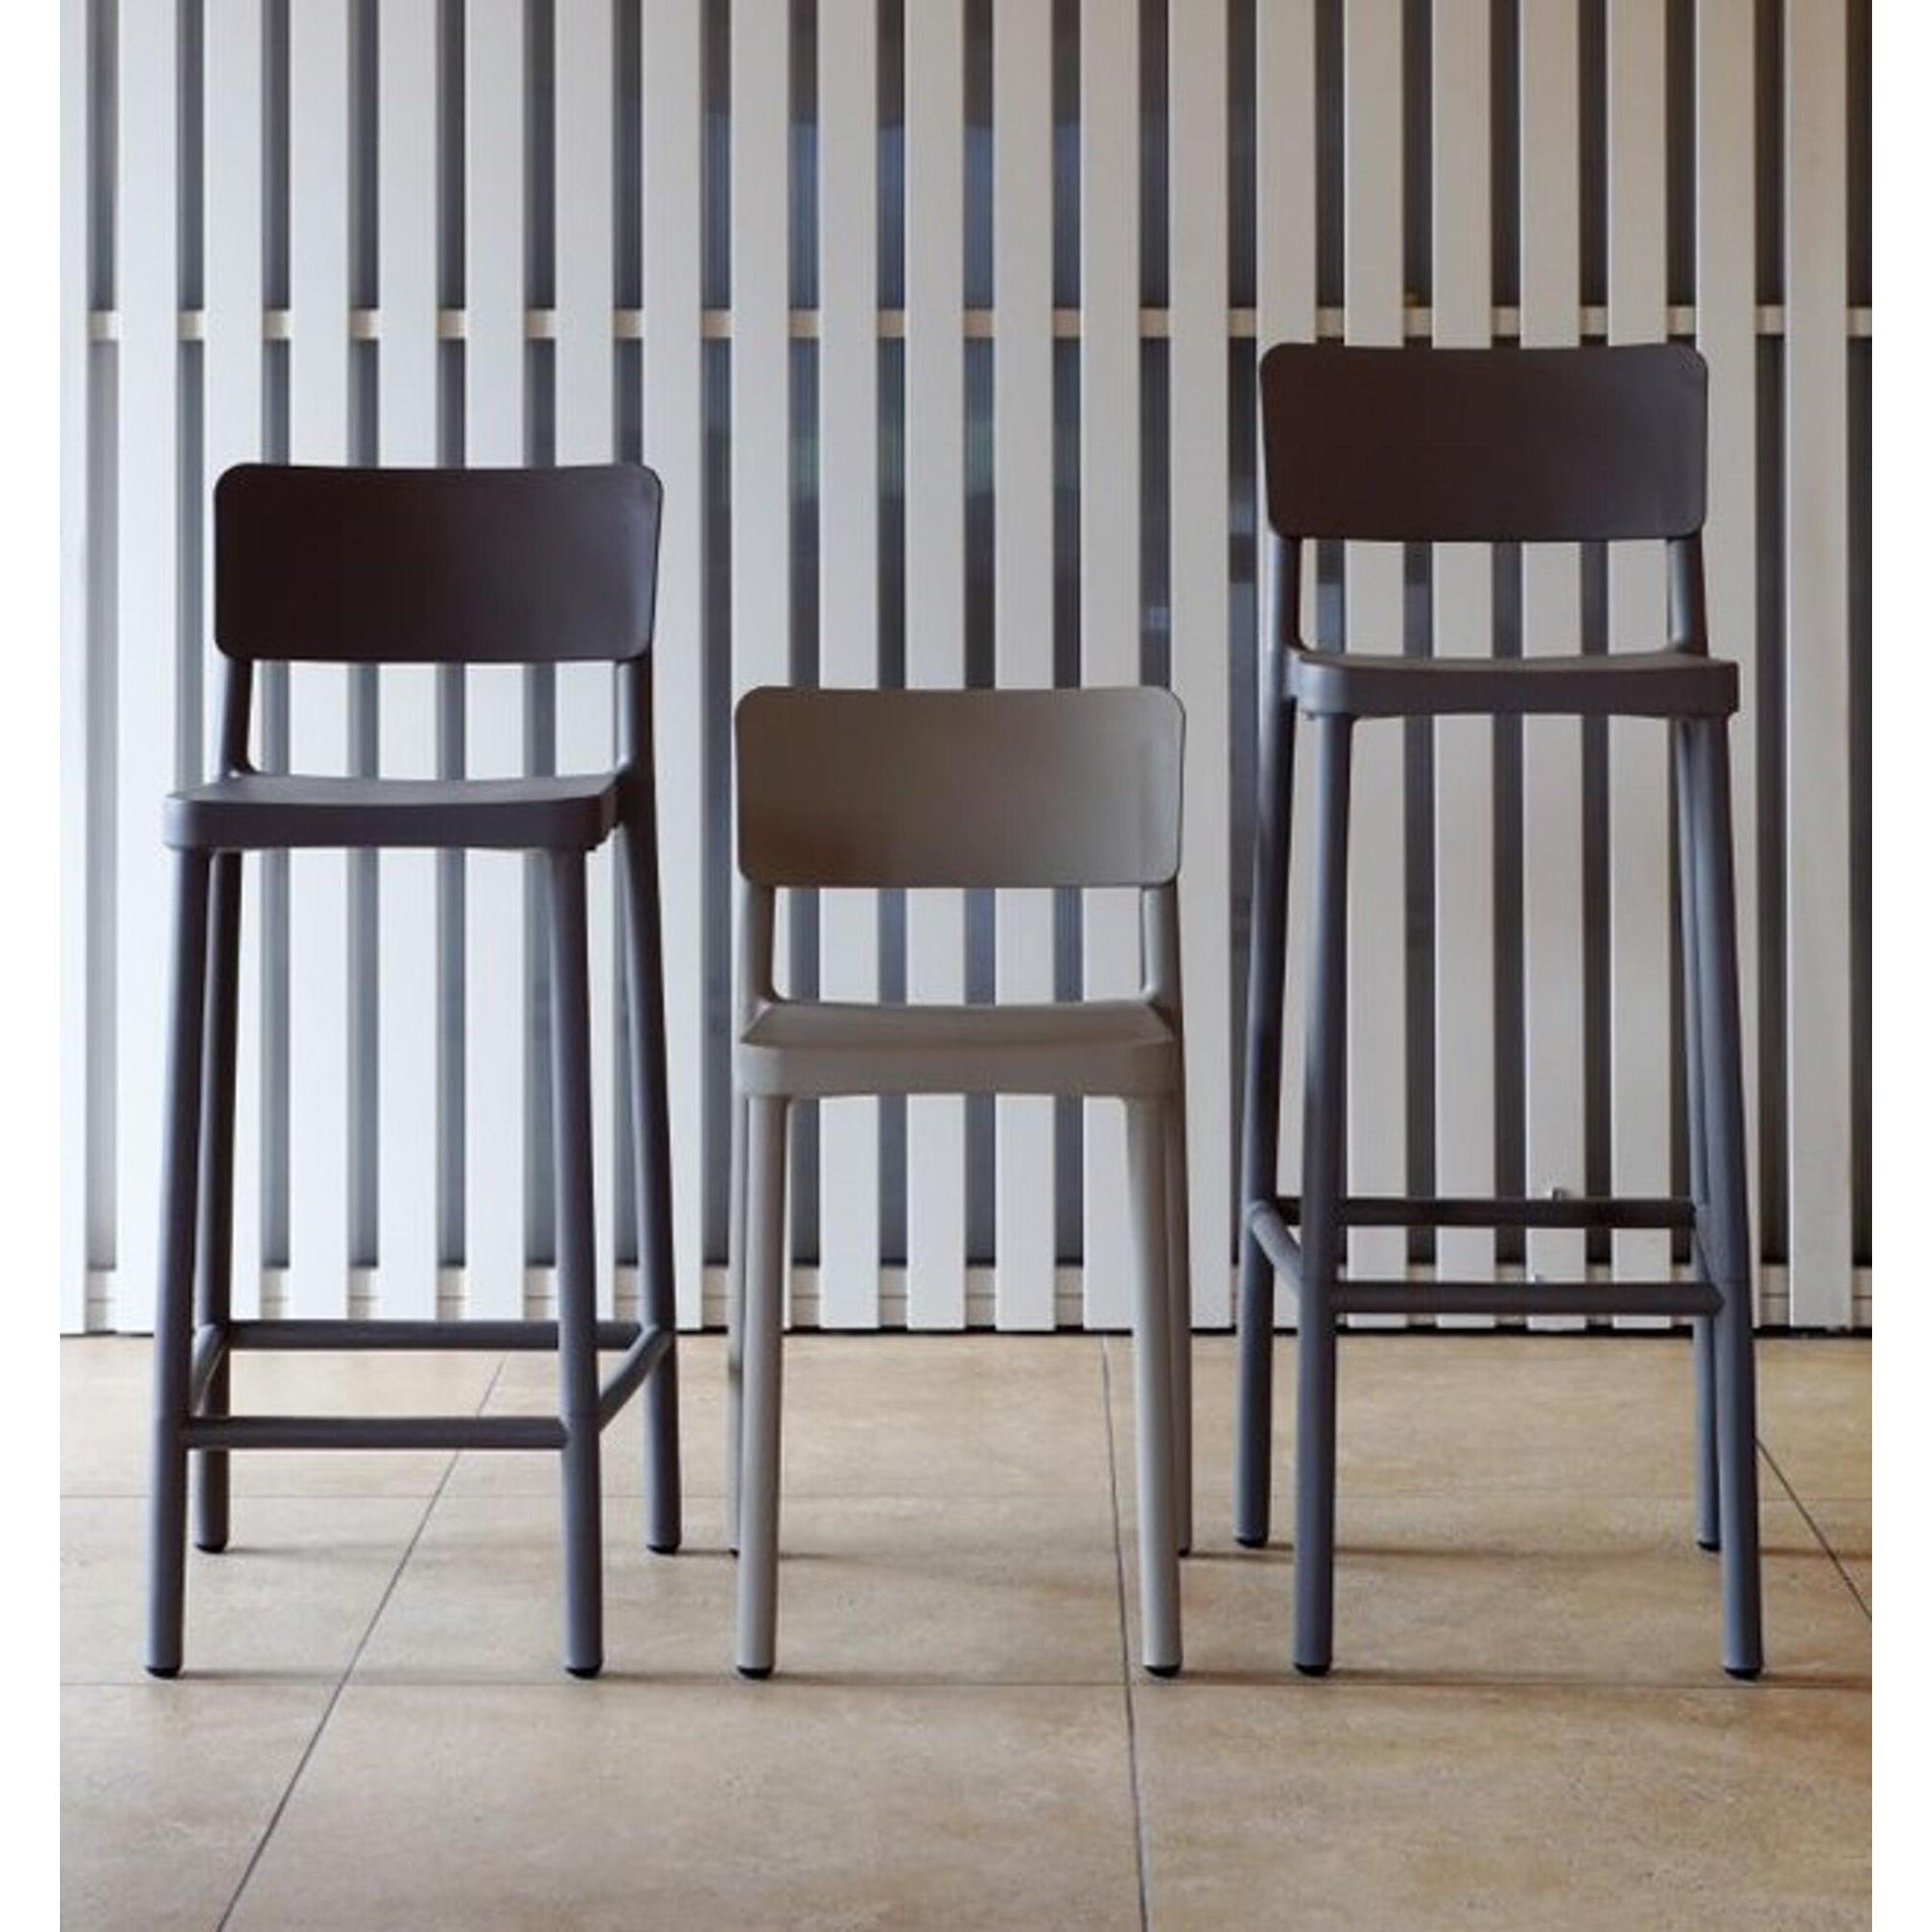 Resol lisboa medium stool indoor, outdoor olive green